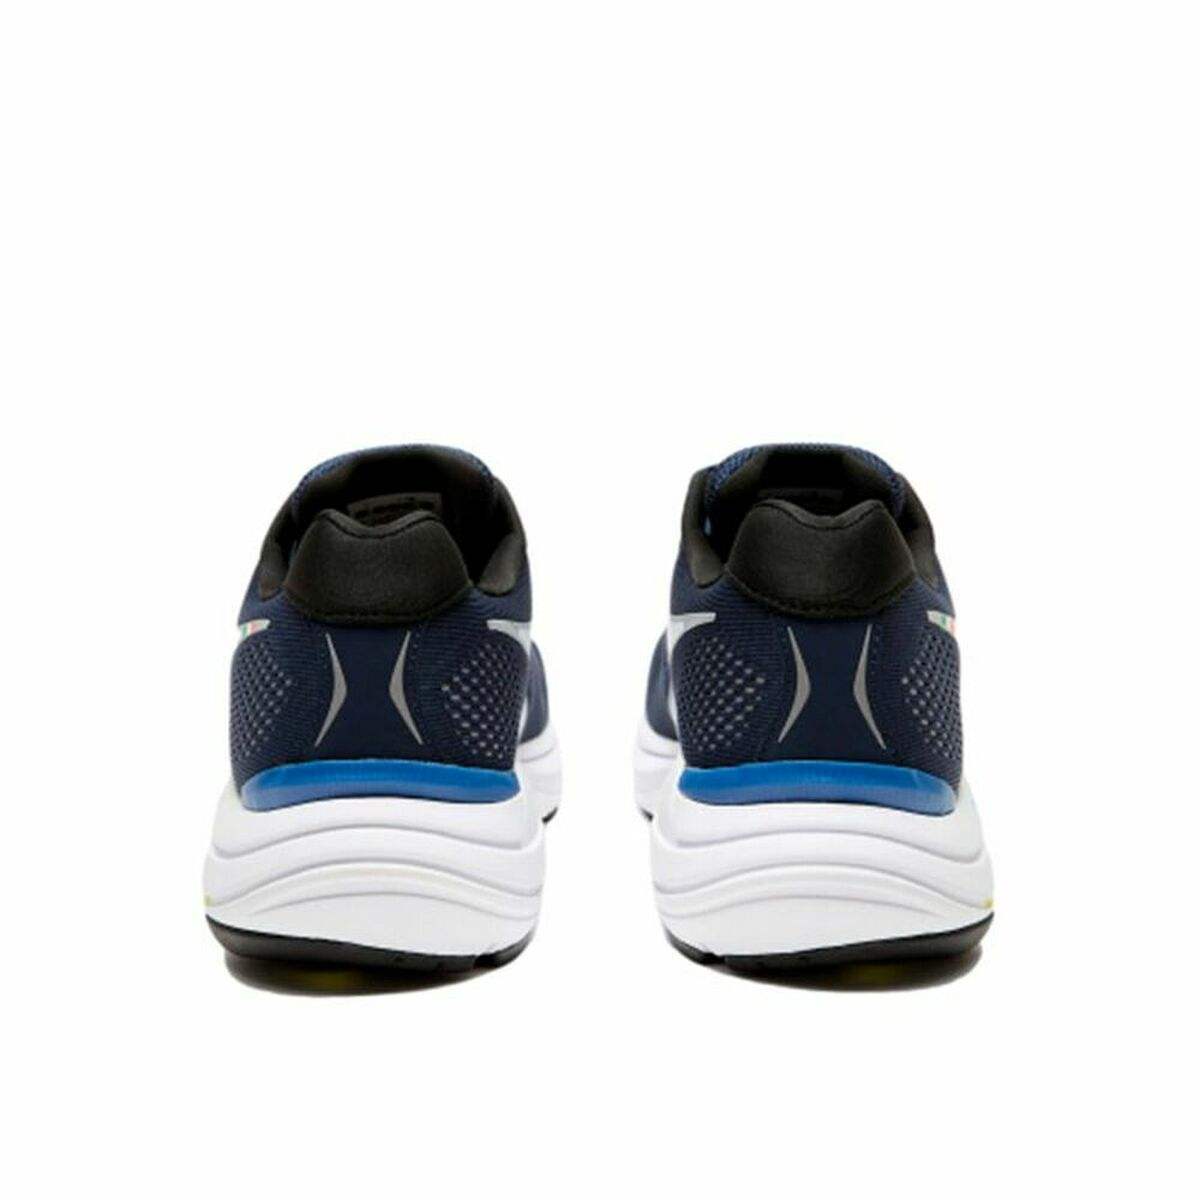 Chaussures de Sport pour Homme Diadora Mythos Blushield Blue marine - Diadora - Jardin D'Eyden - jardindeyden.fr